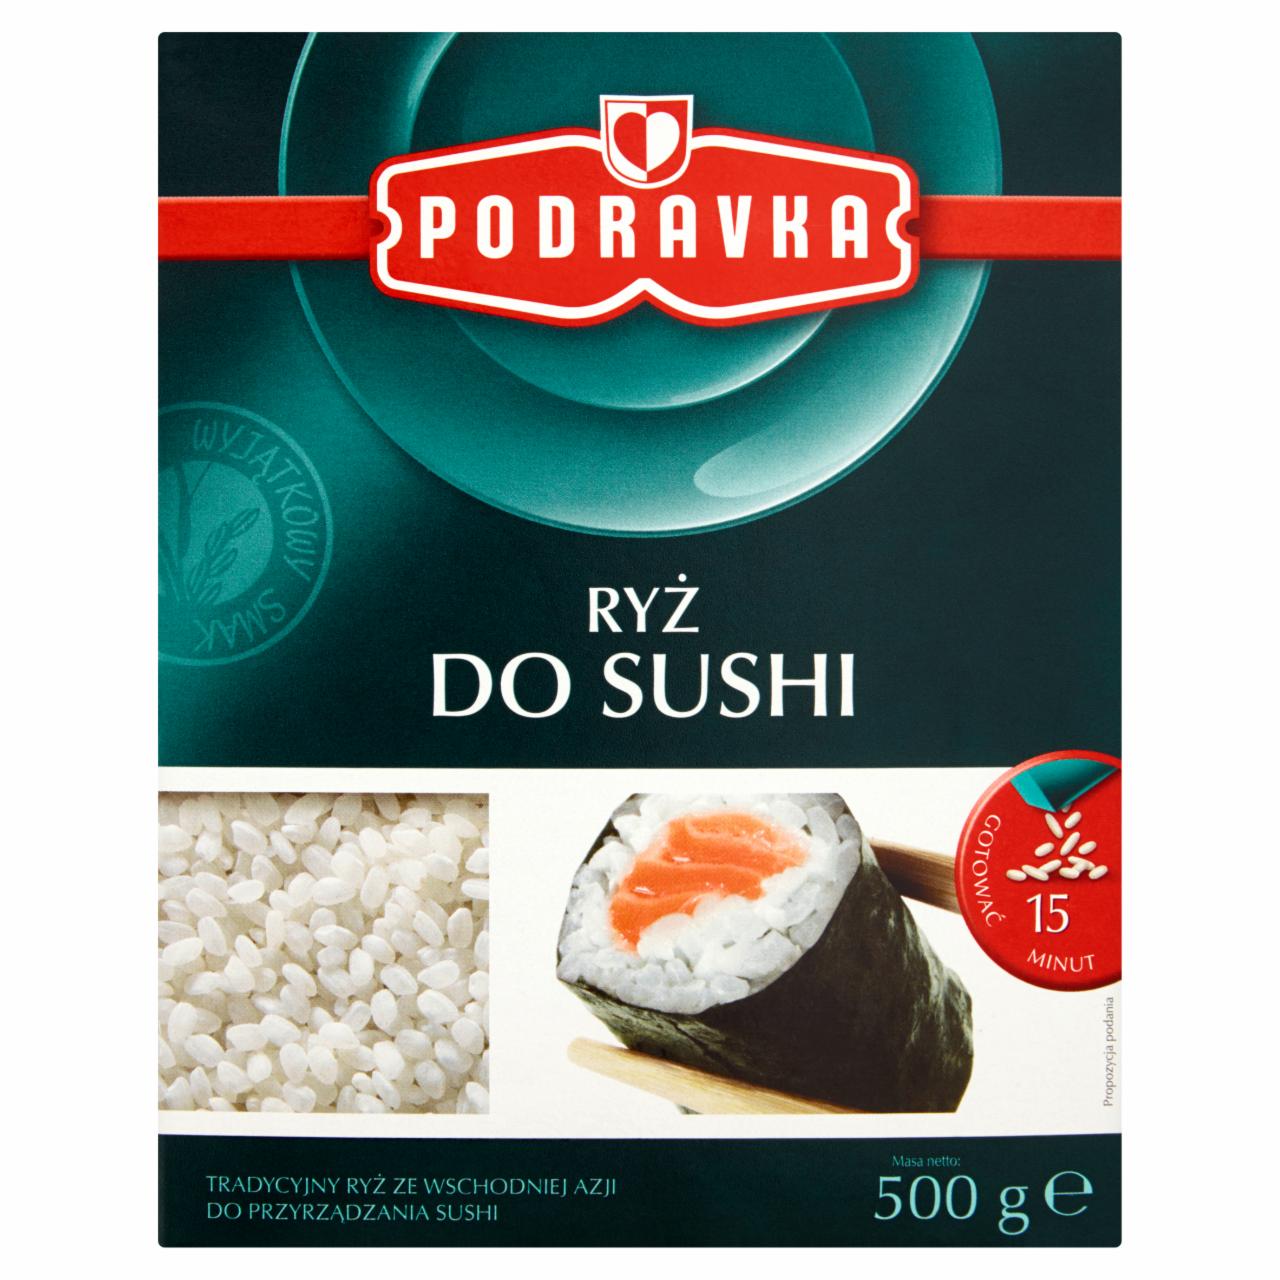 Zdjęcia - Podravka Ryż do sushi 500 g